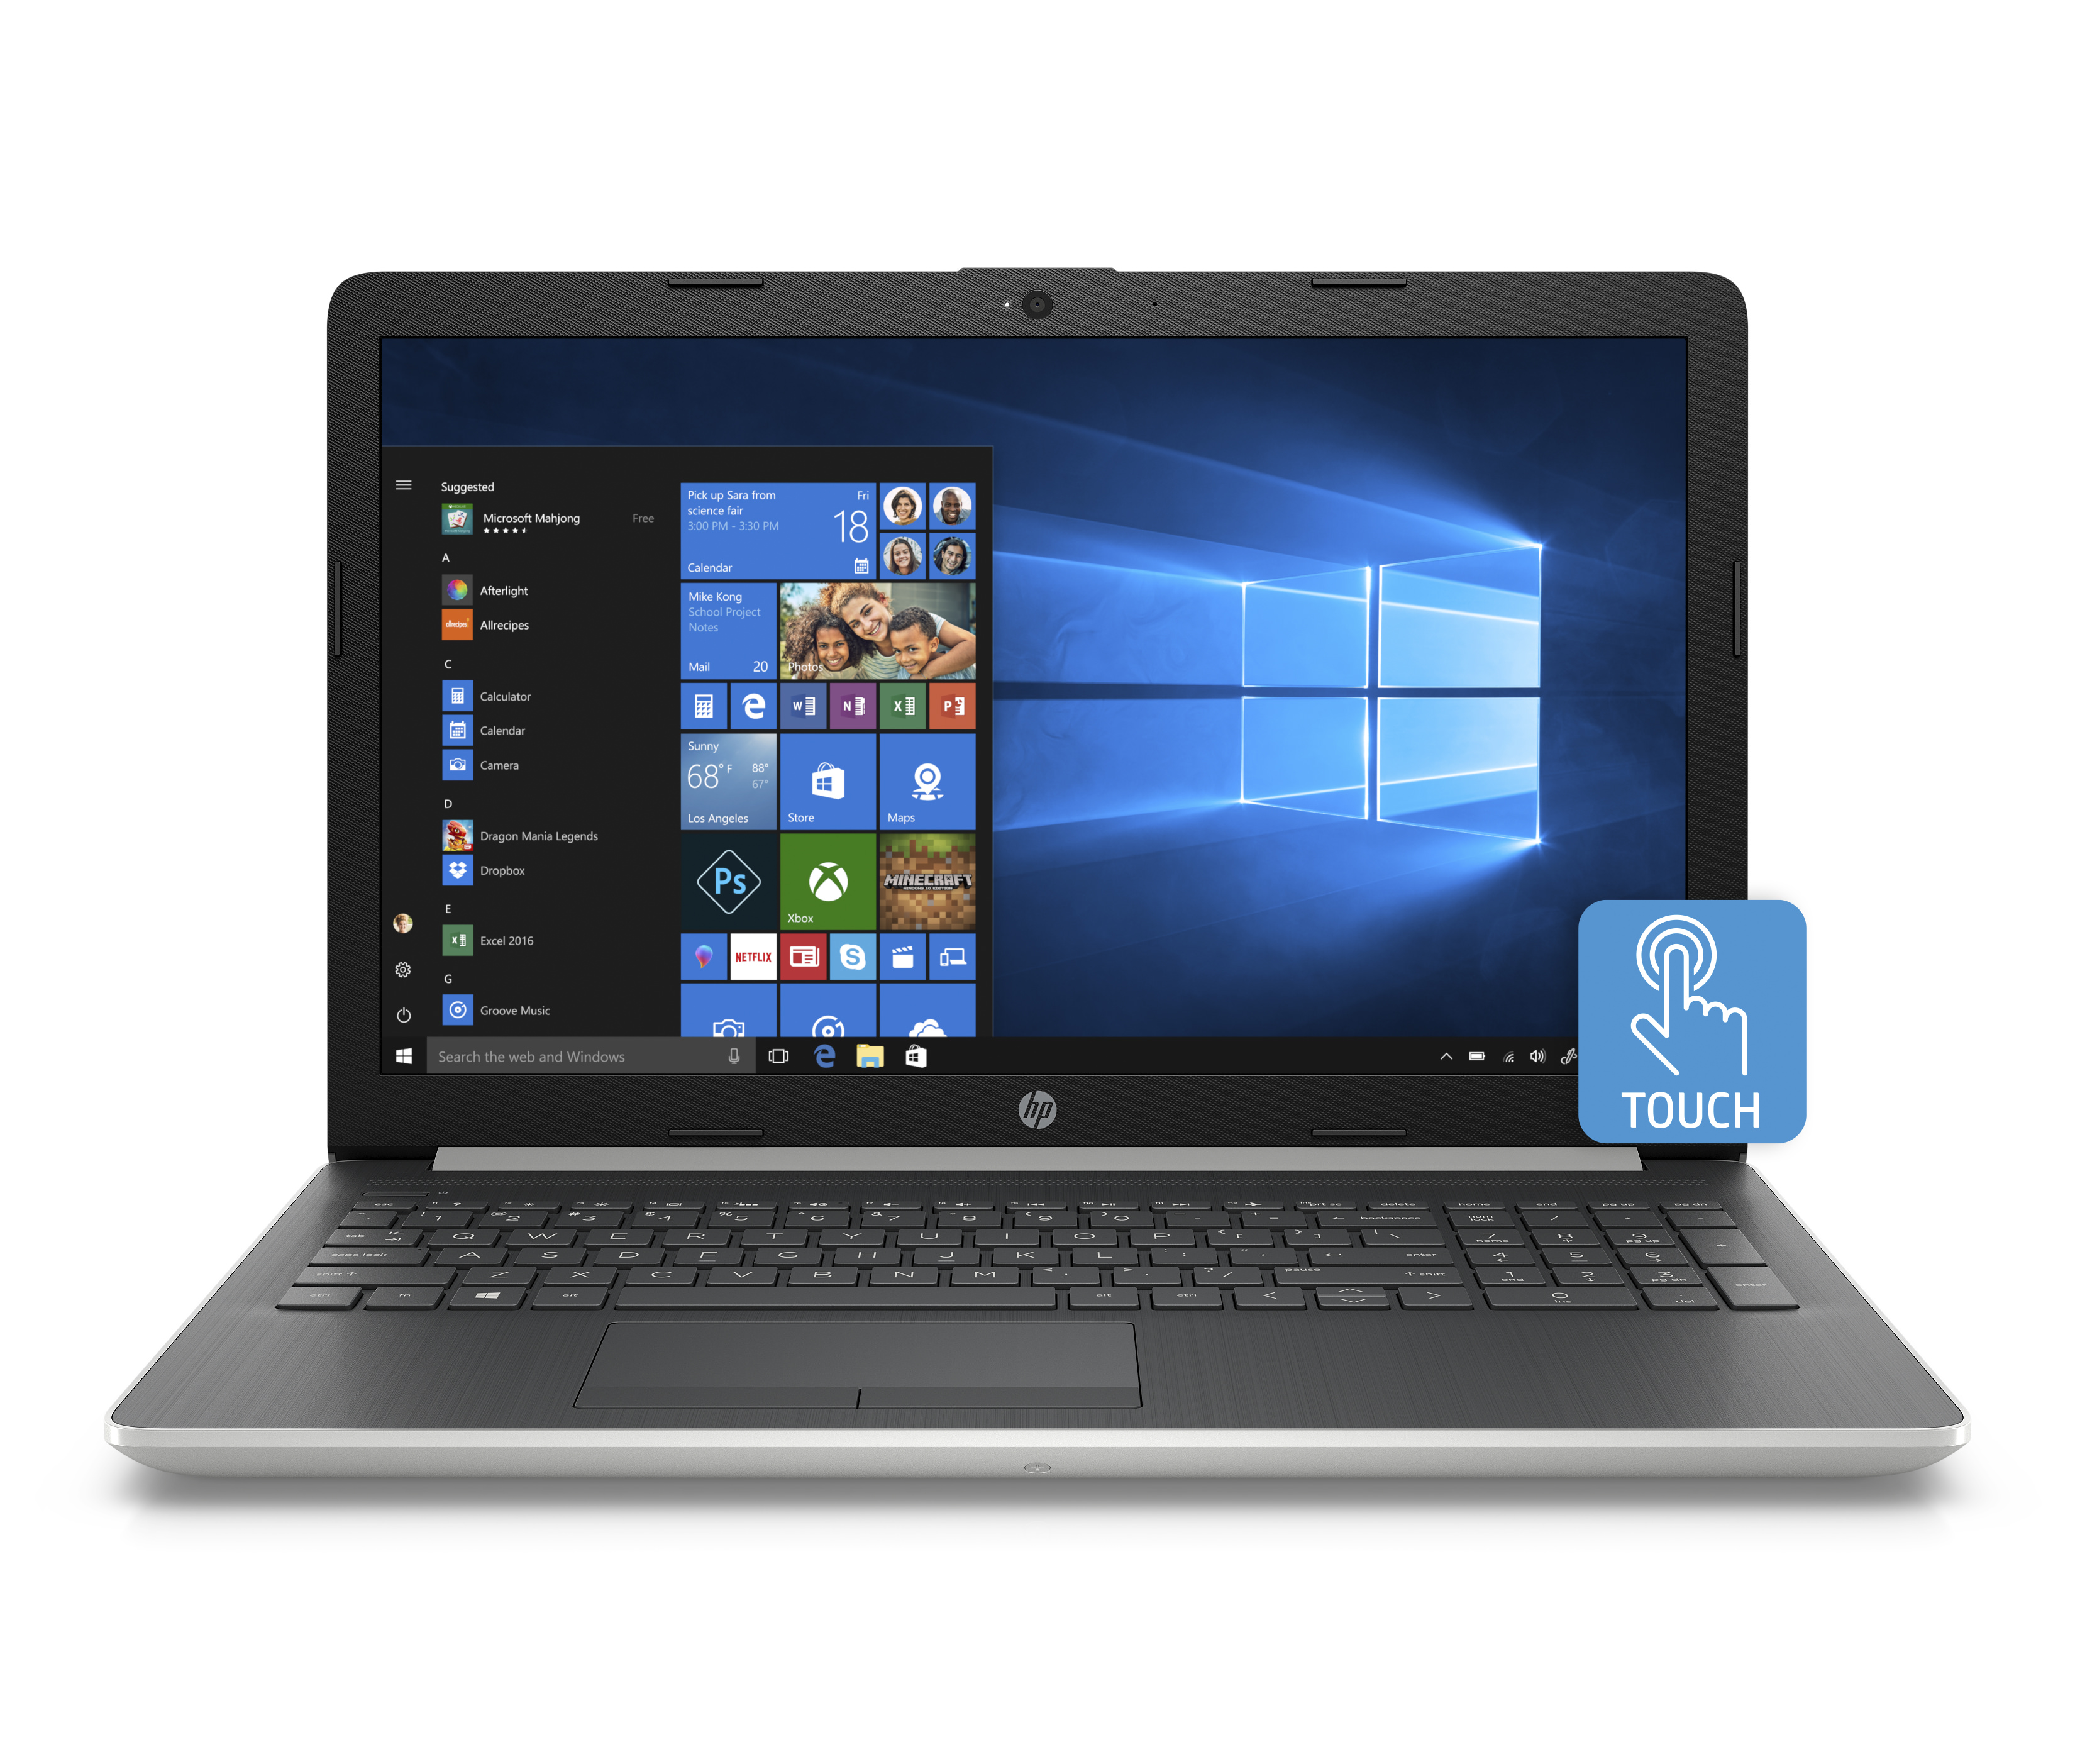 HP 15-da0053wm 15.6″ Touch Laptop with 8th Gen Core i5, 4GB RAM, 1TB HDD + 16GB Intel Optane memory